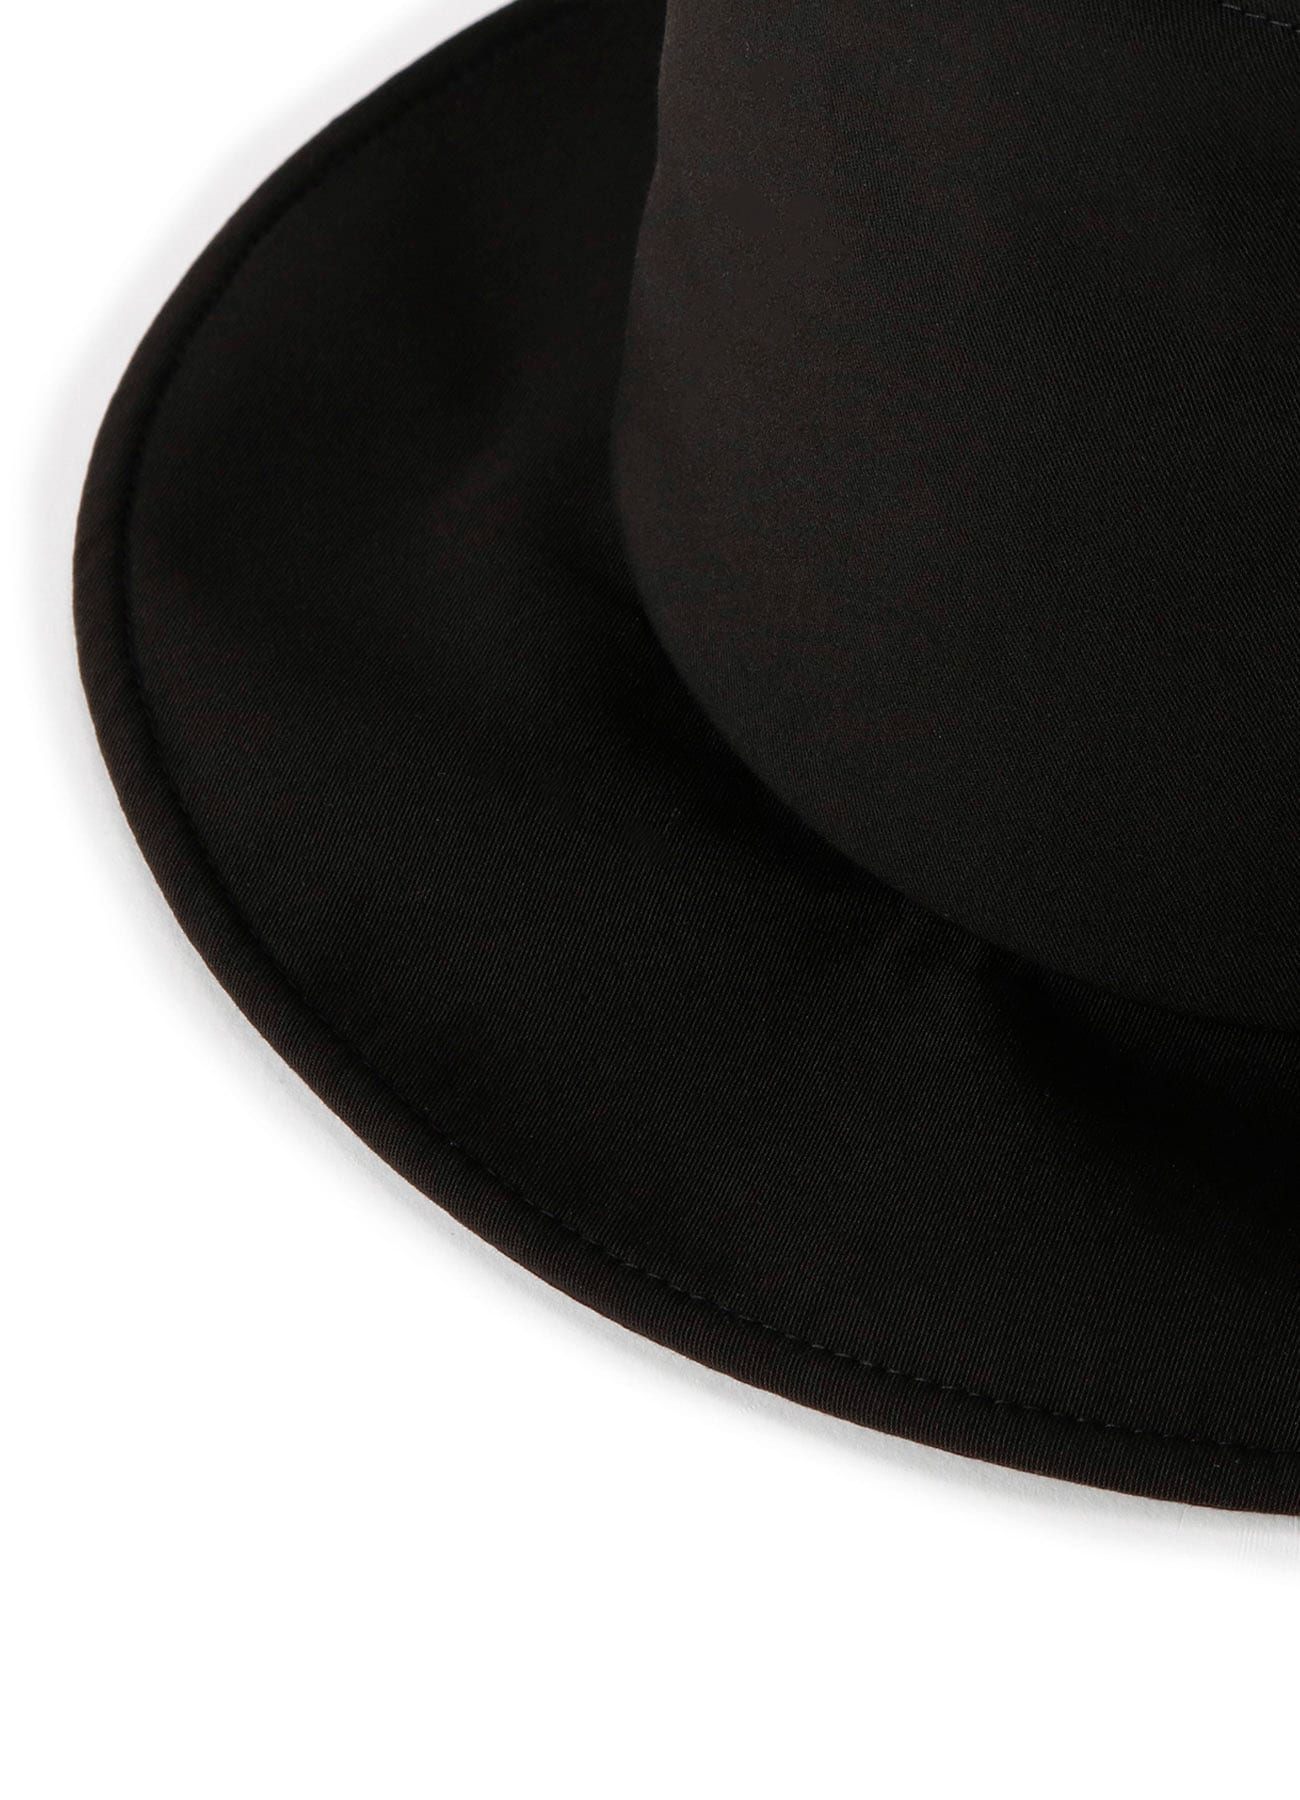 Pe/Rayon Gabardine Stretch Flat Top Circular Hat